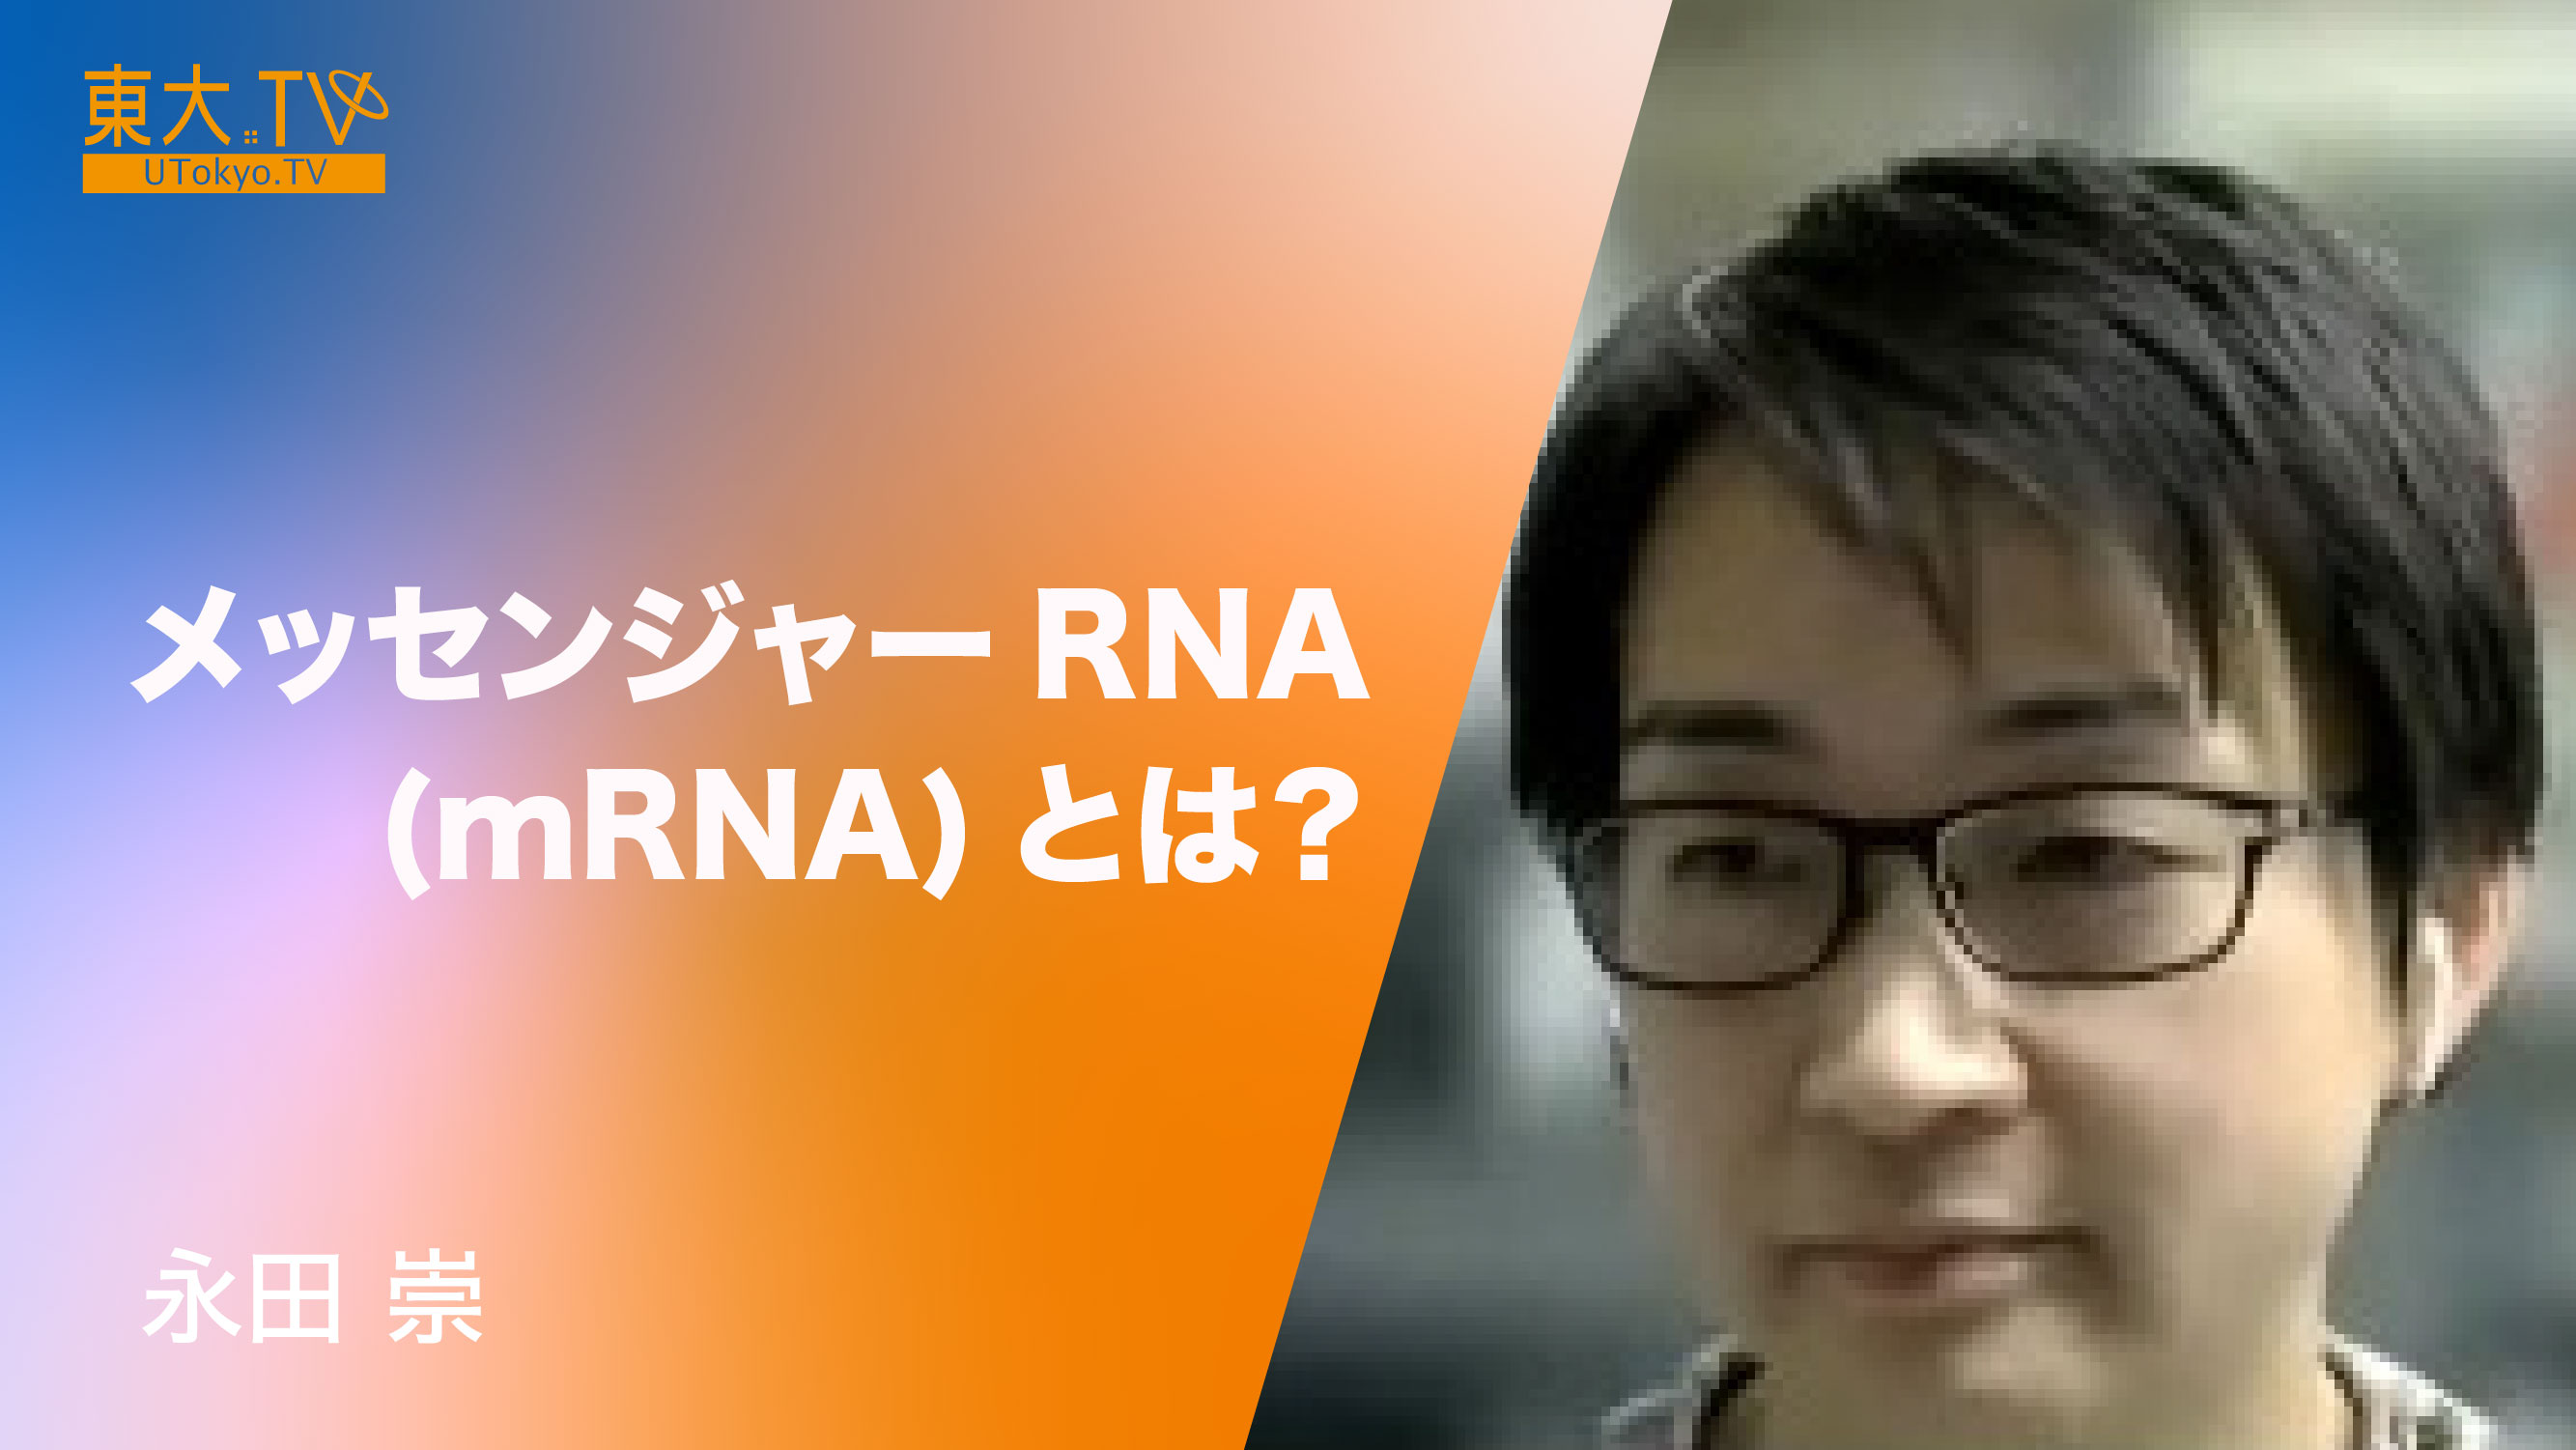 What is messenger RNA (mRNA)? [JP]